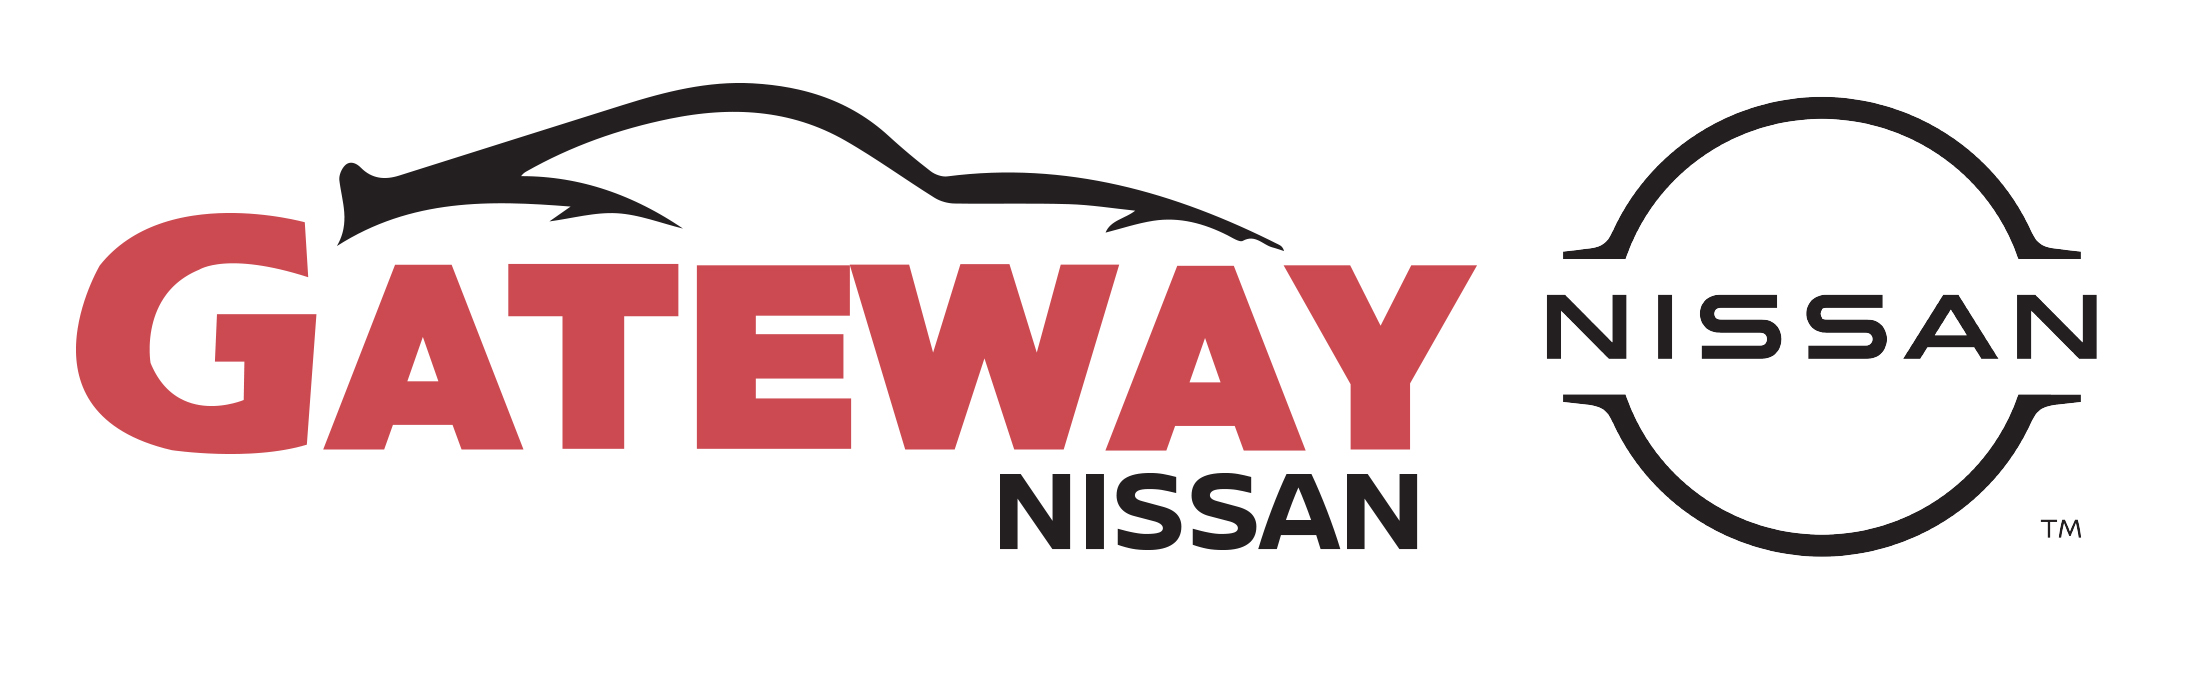 About Gateway Nissan in Greeneville, TN